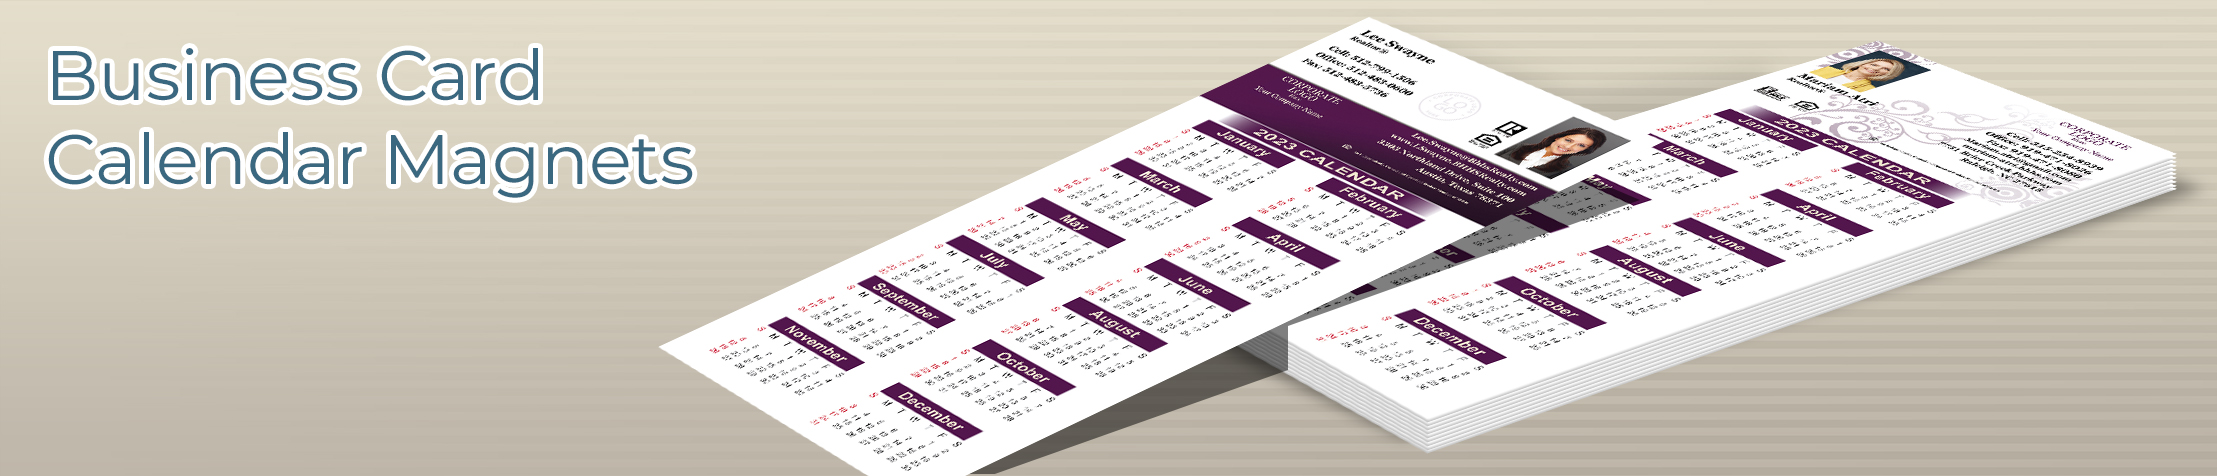 Berkshire Hathaway Real Estate Business Card Calendar Magnets - Berkshire Hathaway  personalized marketing materials | BestPrintBuy.com